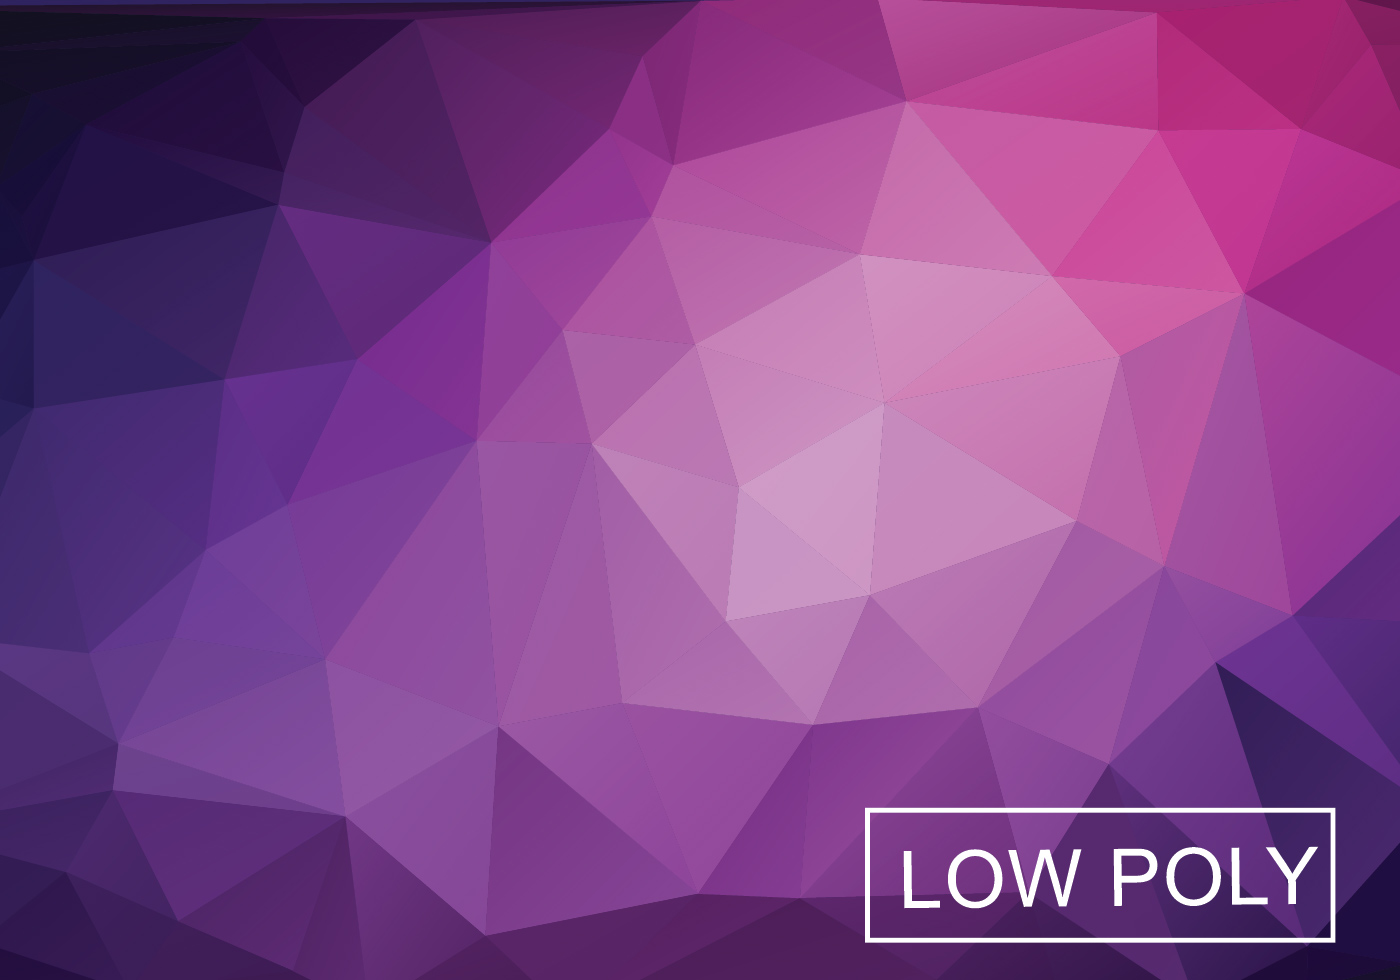 Low Polygonal Background Vector - Download Free Vector Art, Stock